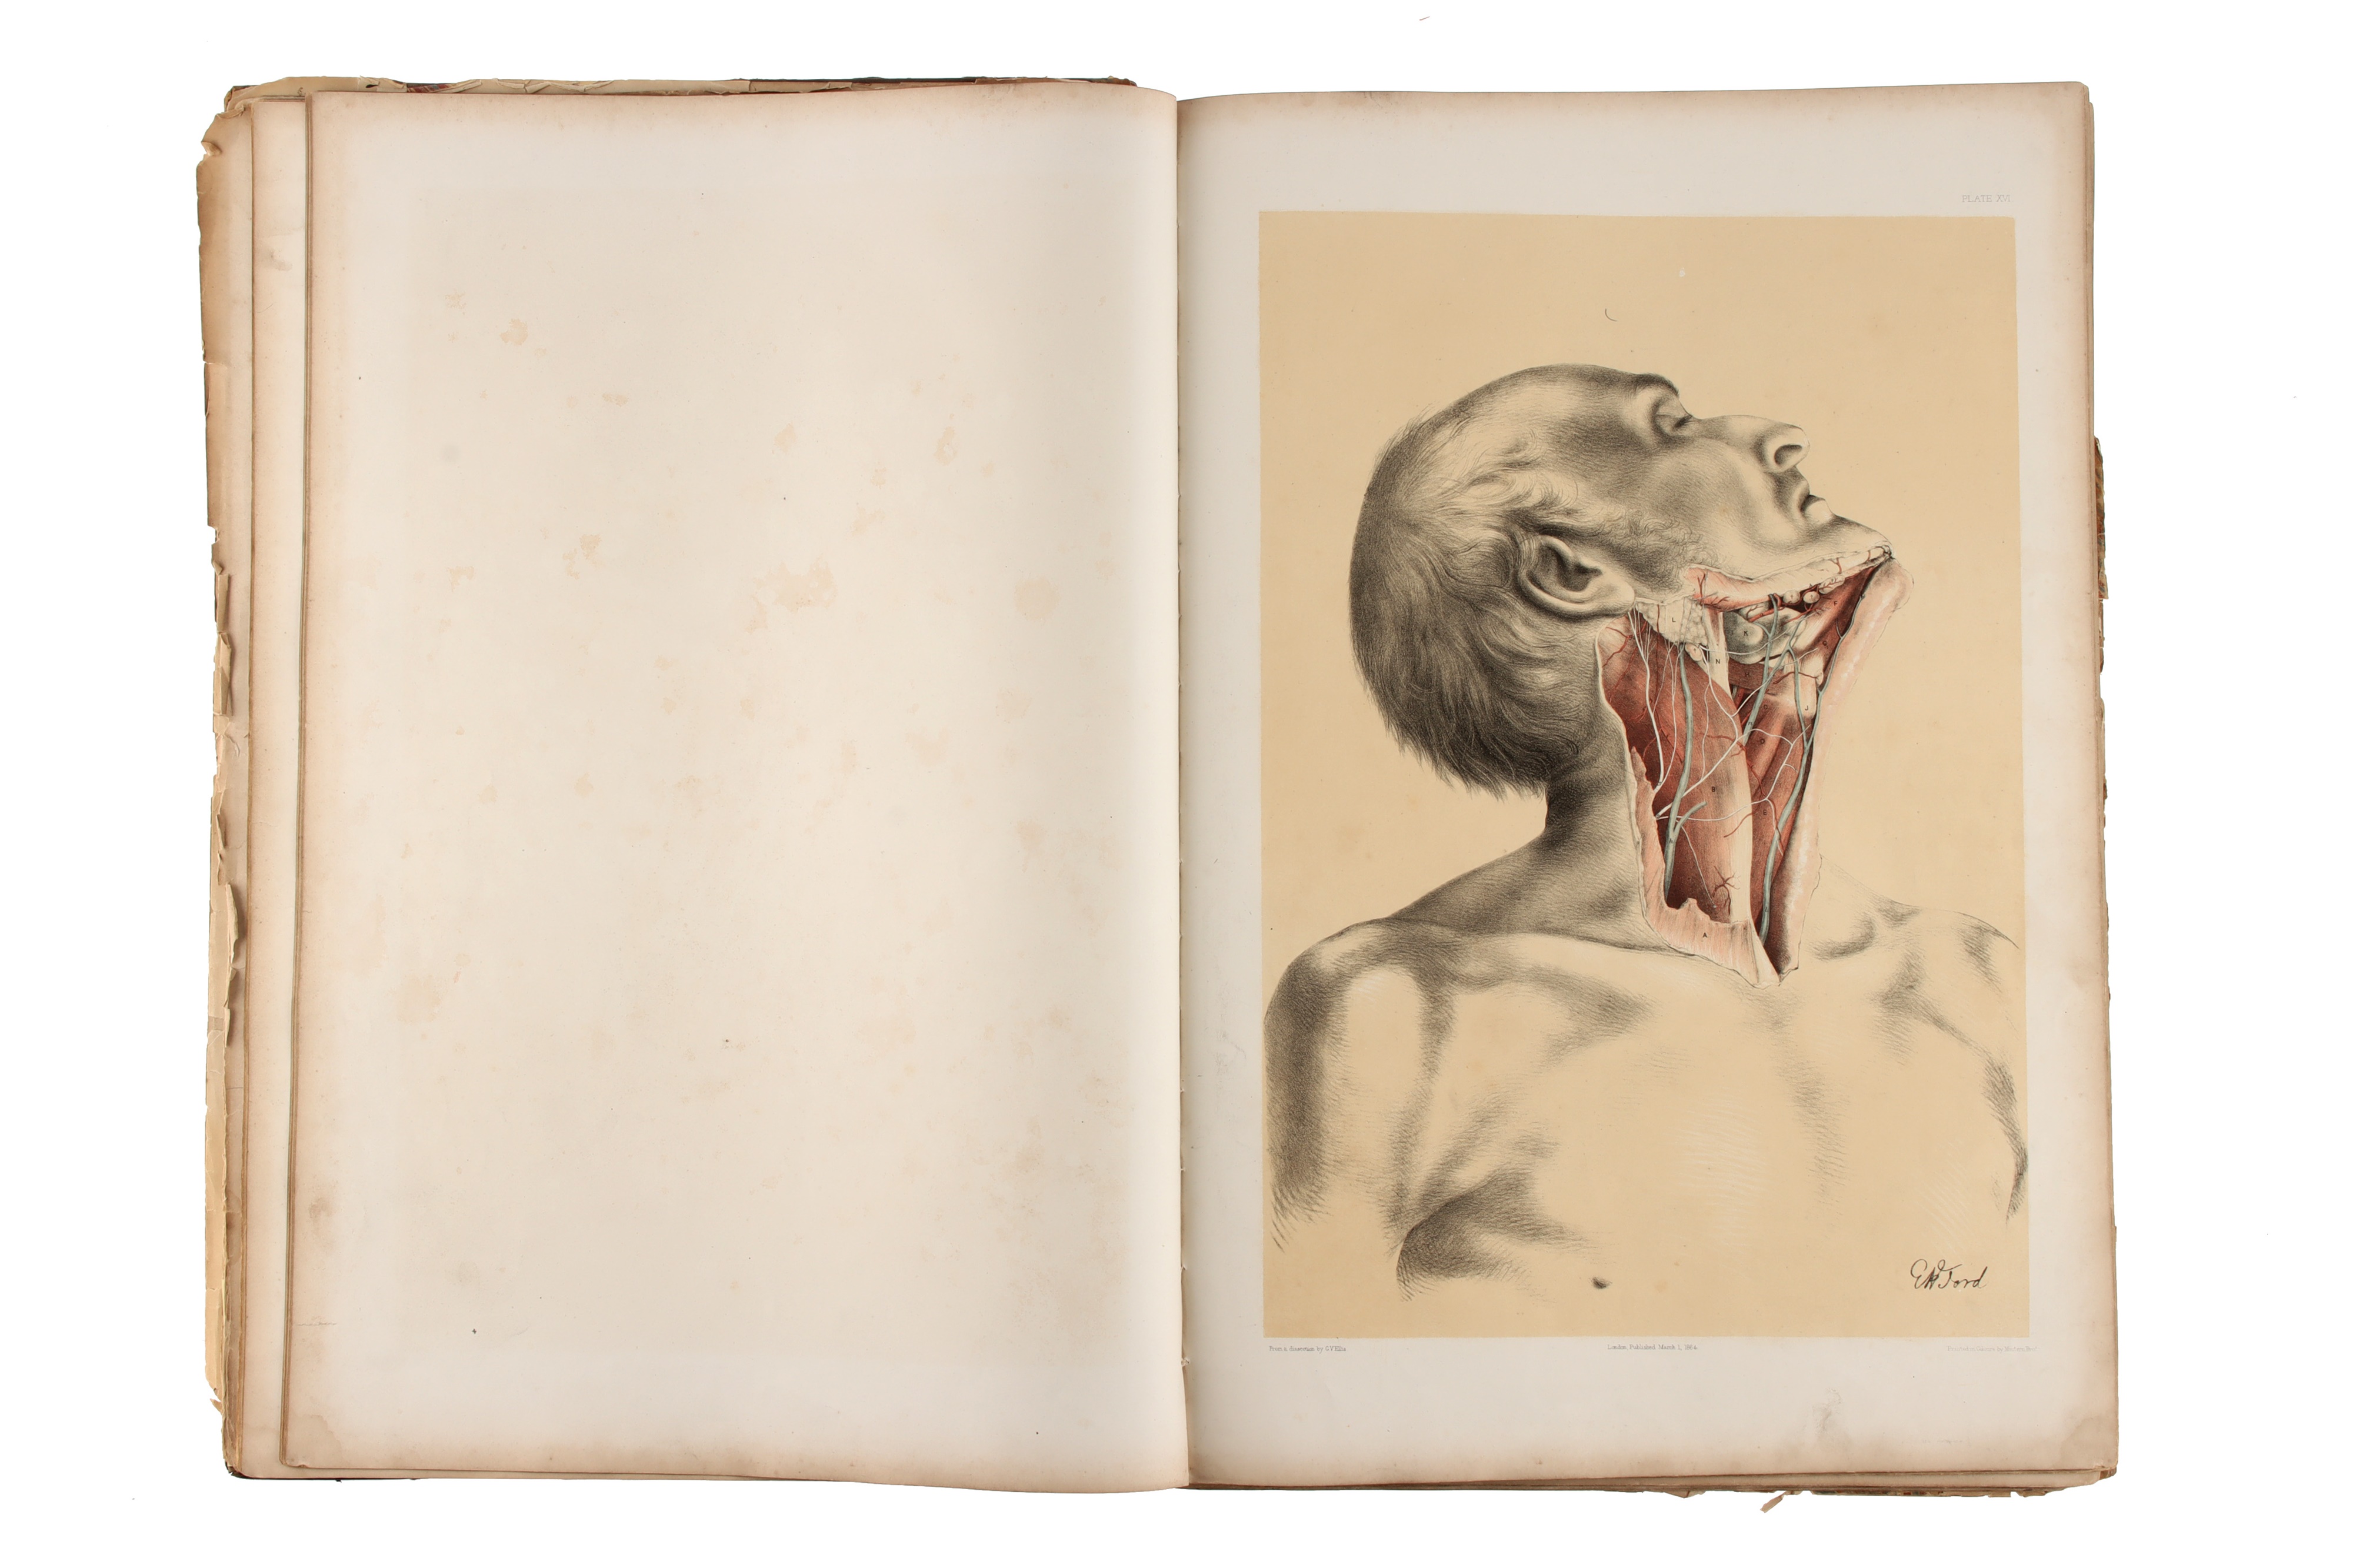 Ellis, George Viner, Illustrations of Dissections, 1867, - Image 5 of 6